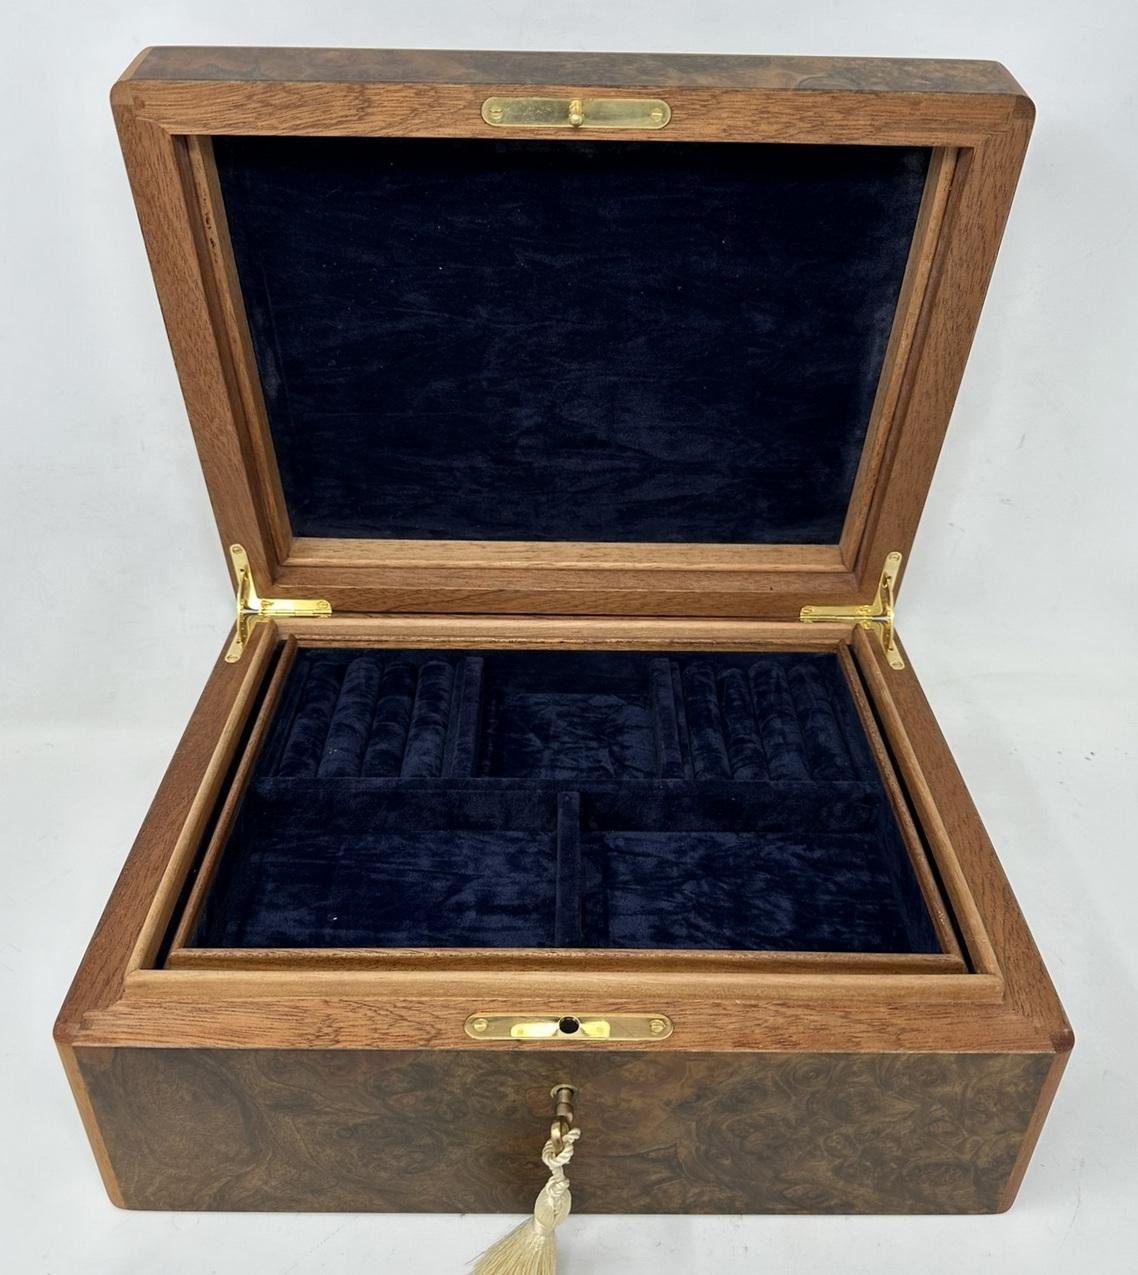 Polished Burl Walnut Mahogany Handmade Jewelry Casket Box by Manning of Ireland Irish New For Sale